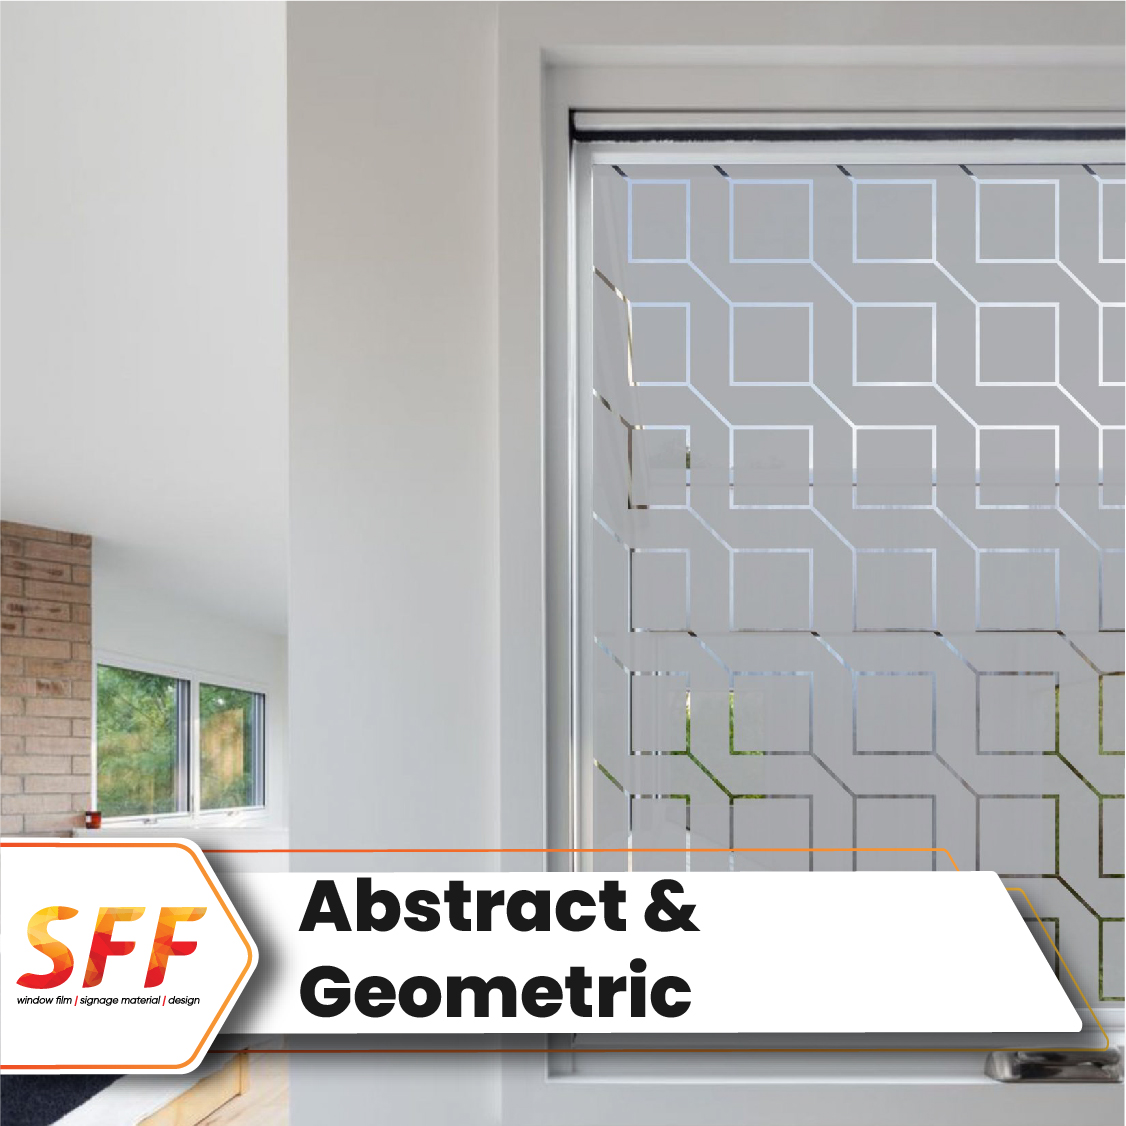 Abstract & Geometric